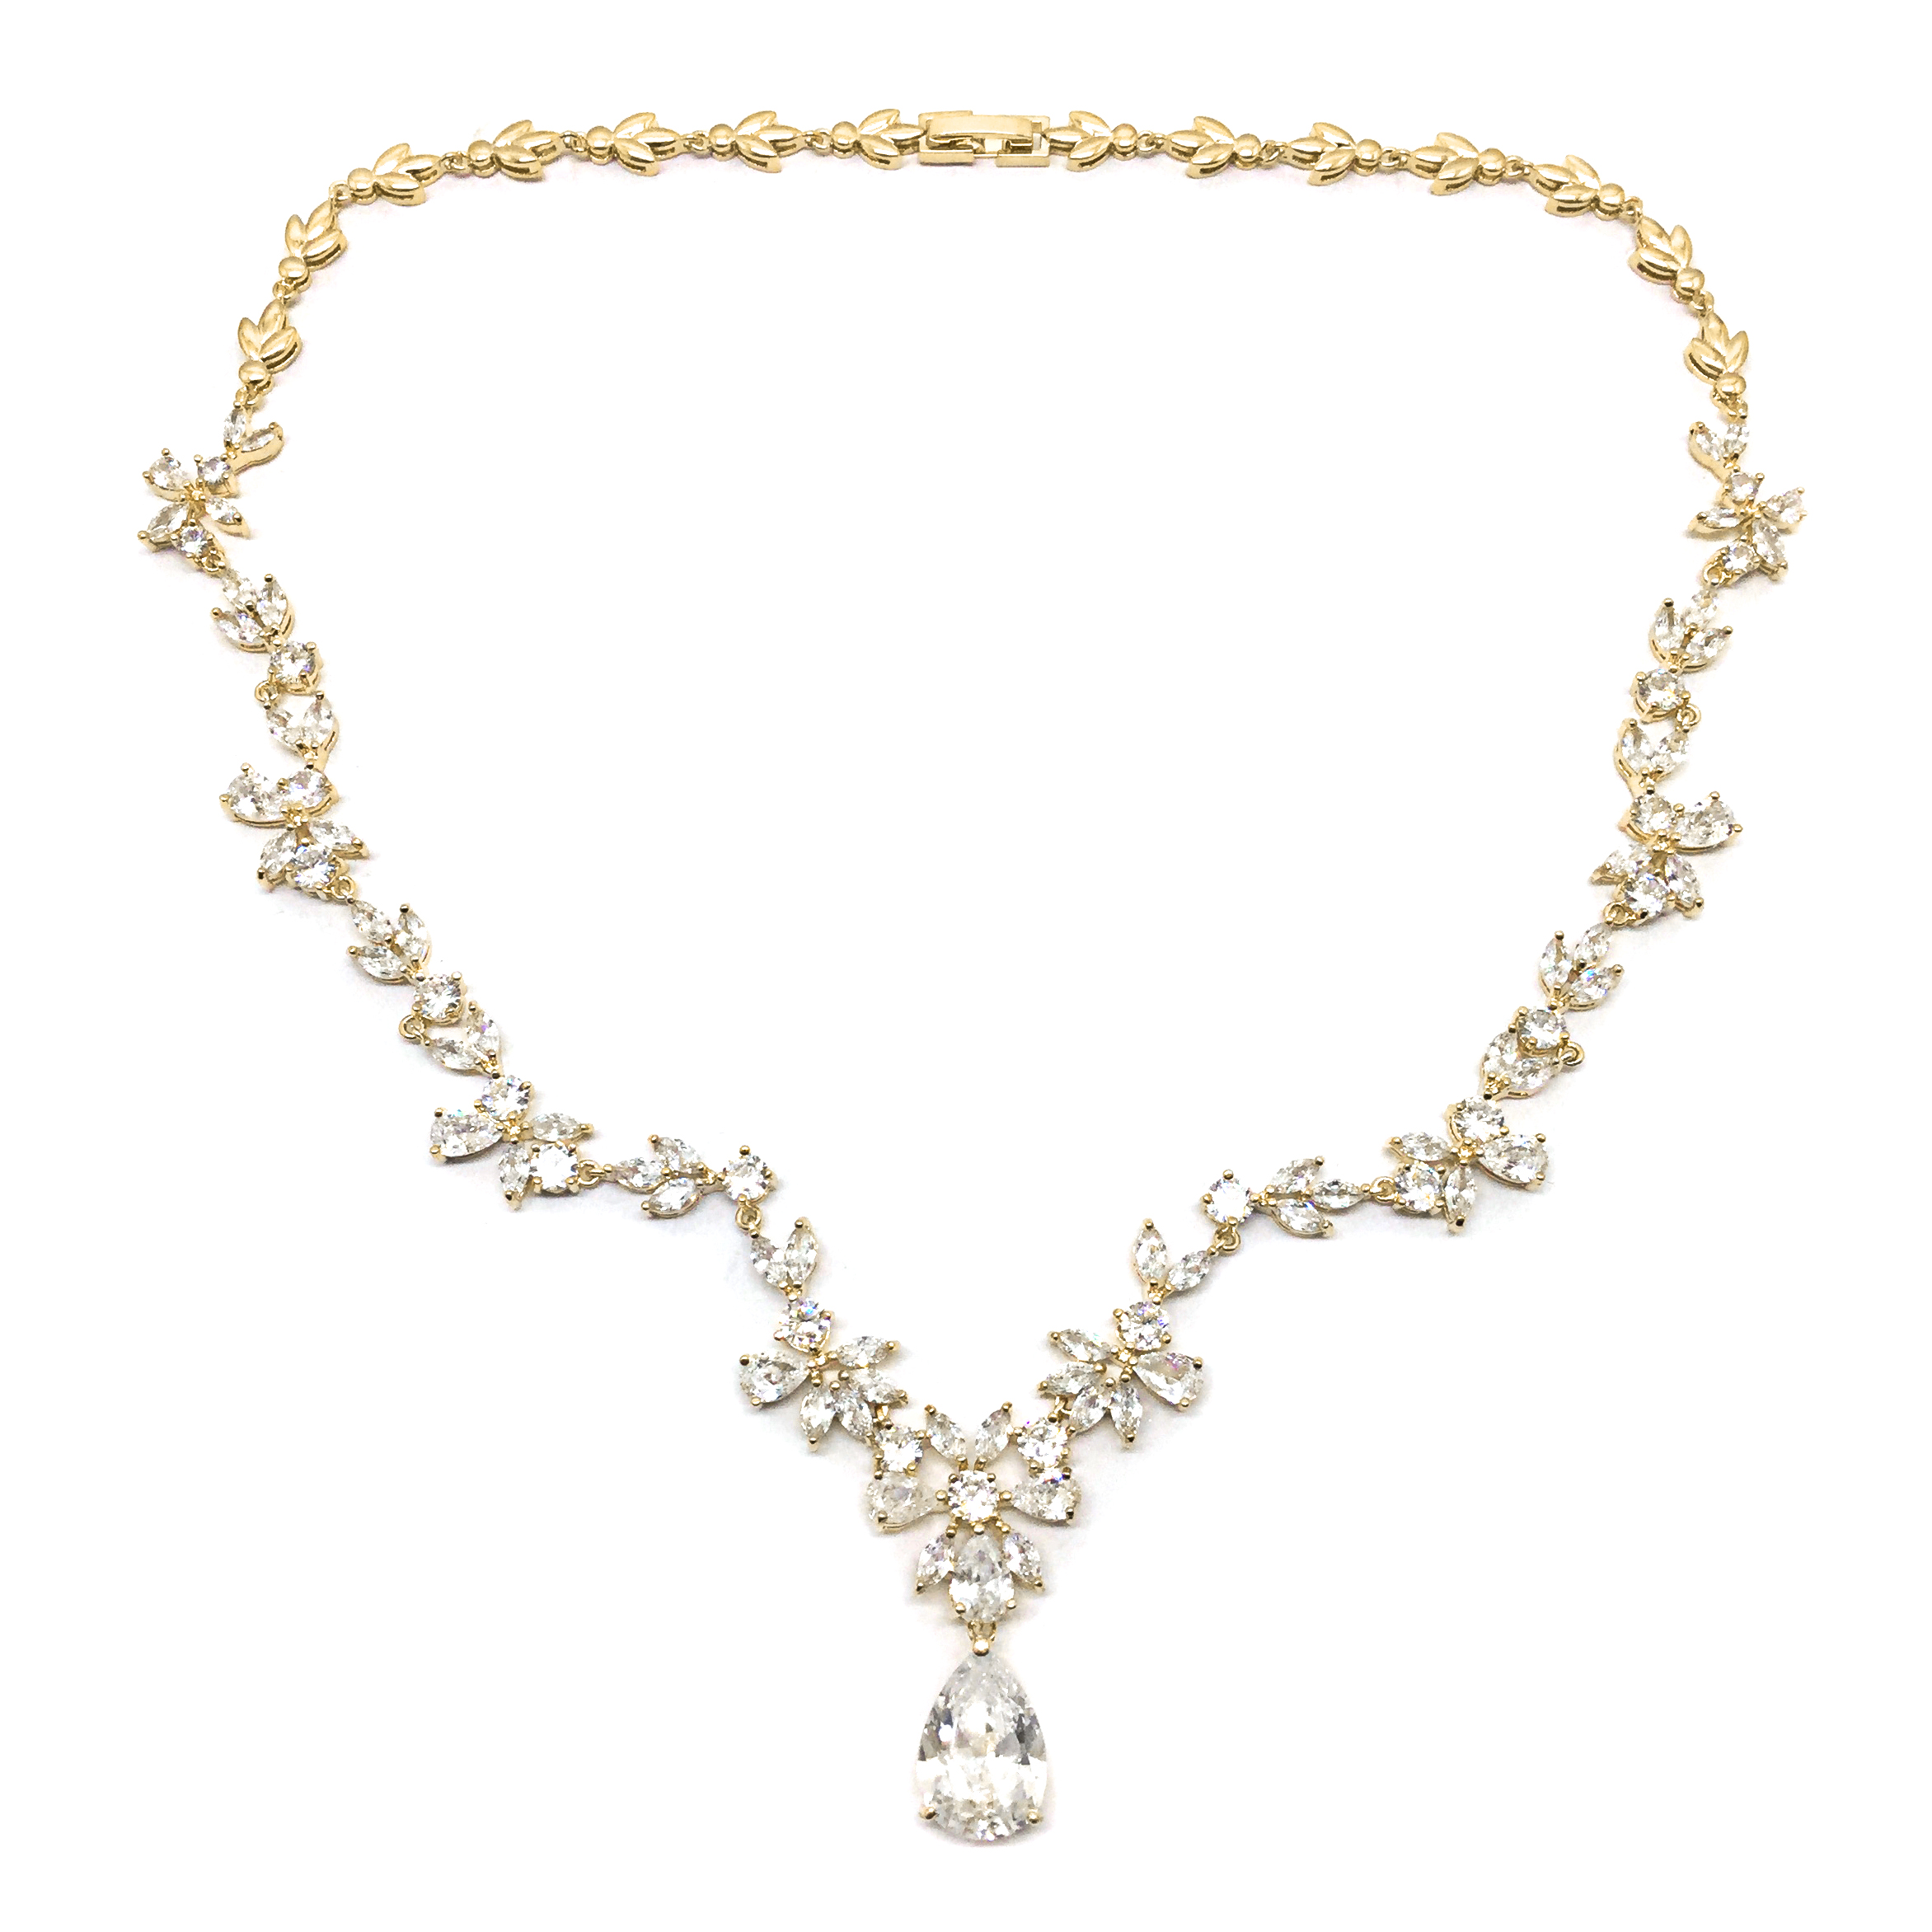 gold diamond pendant| Verona I Jeanette Maree|Shop online now